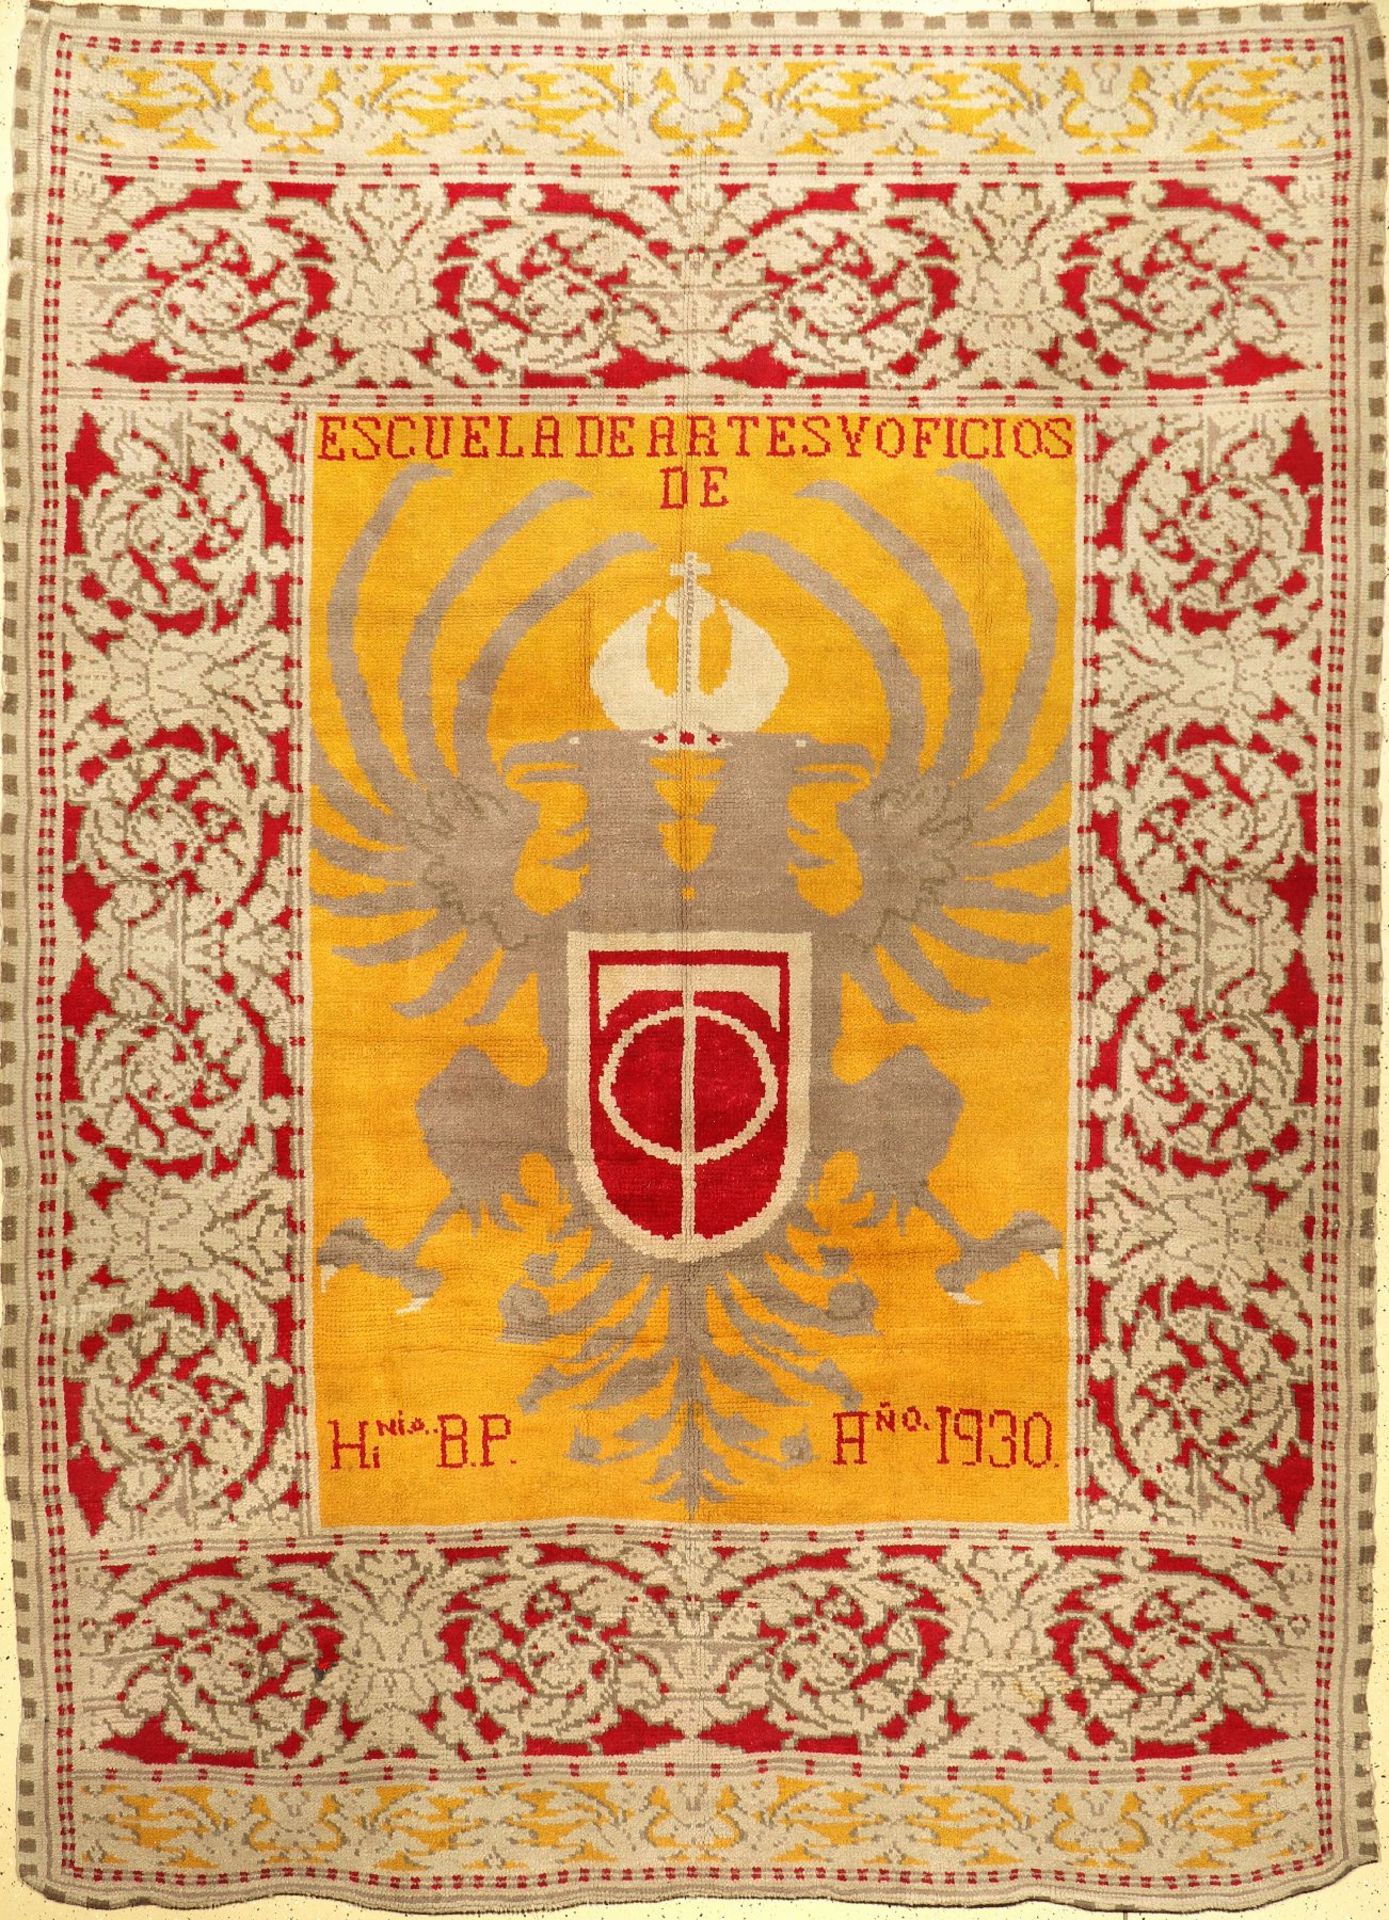 Großer spanischer "Wappen-Teppich" alt (Signiert: Escuela De Artes Y Oficios "Hi Ni.O. B.P.", Ano